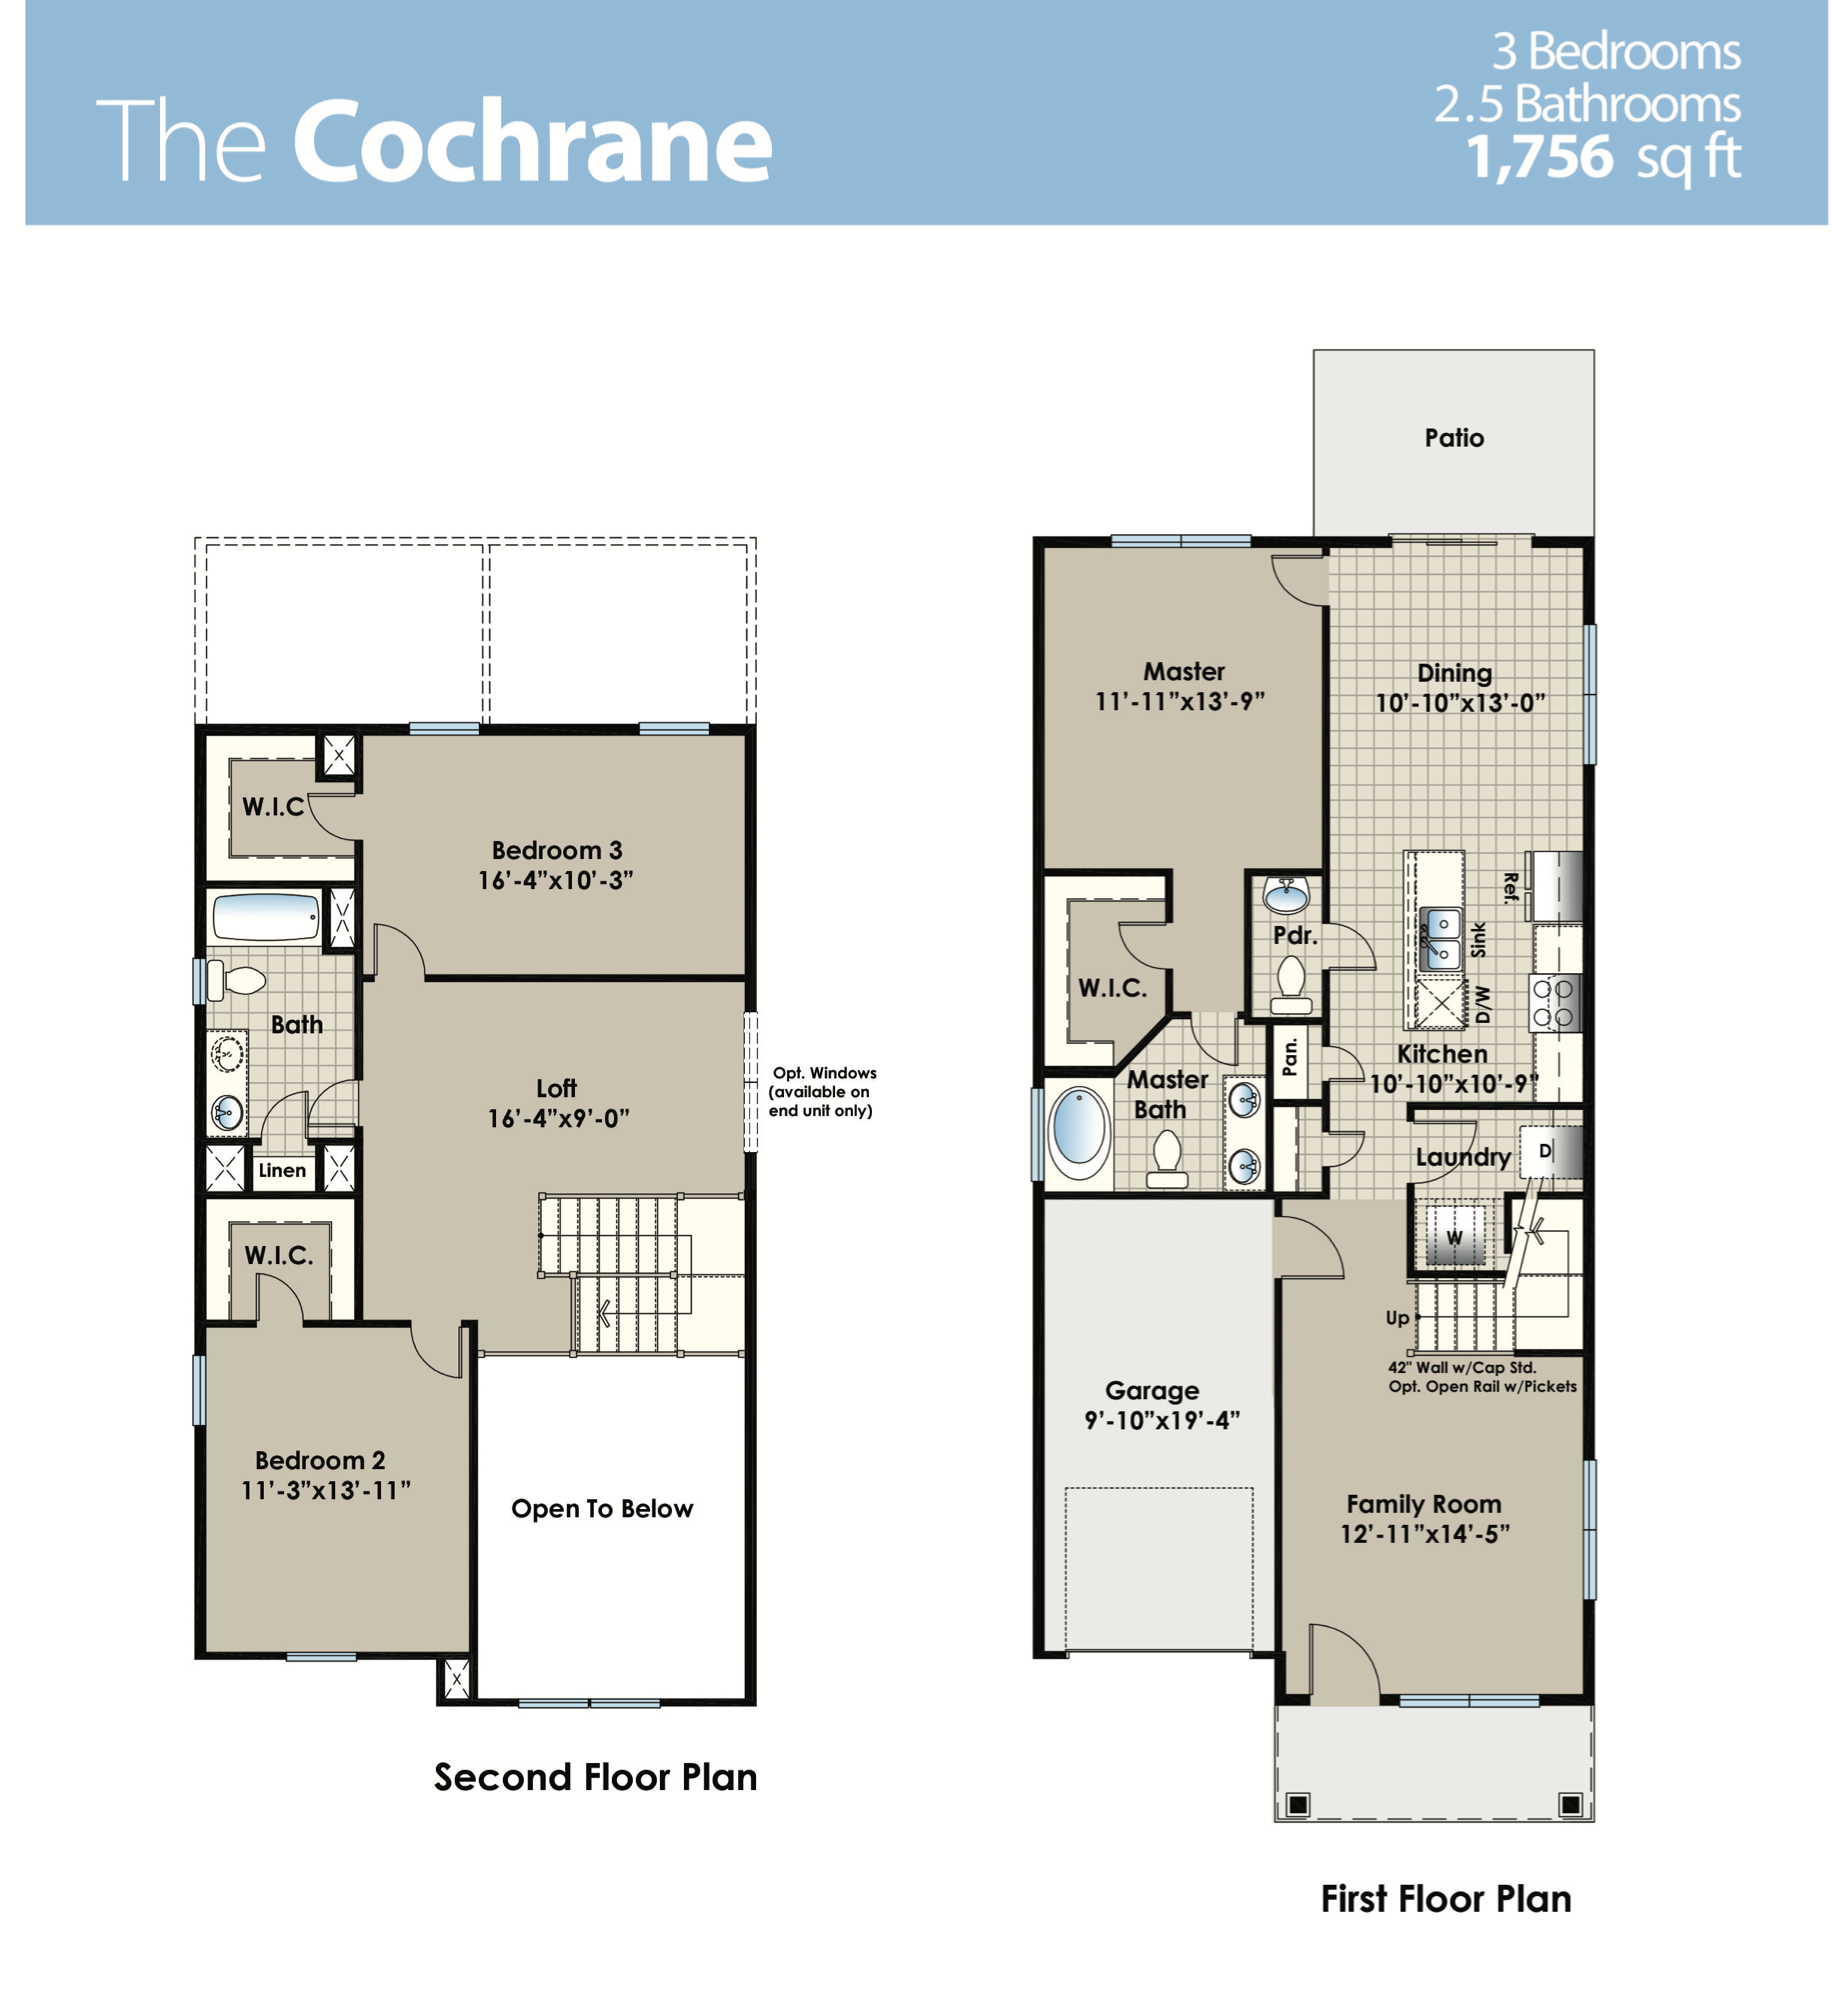 The Cochrane floor plan image